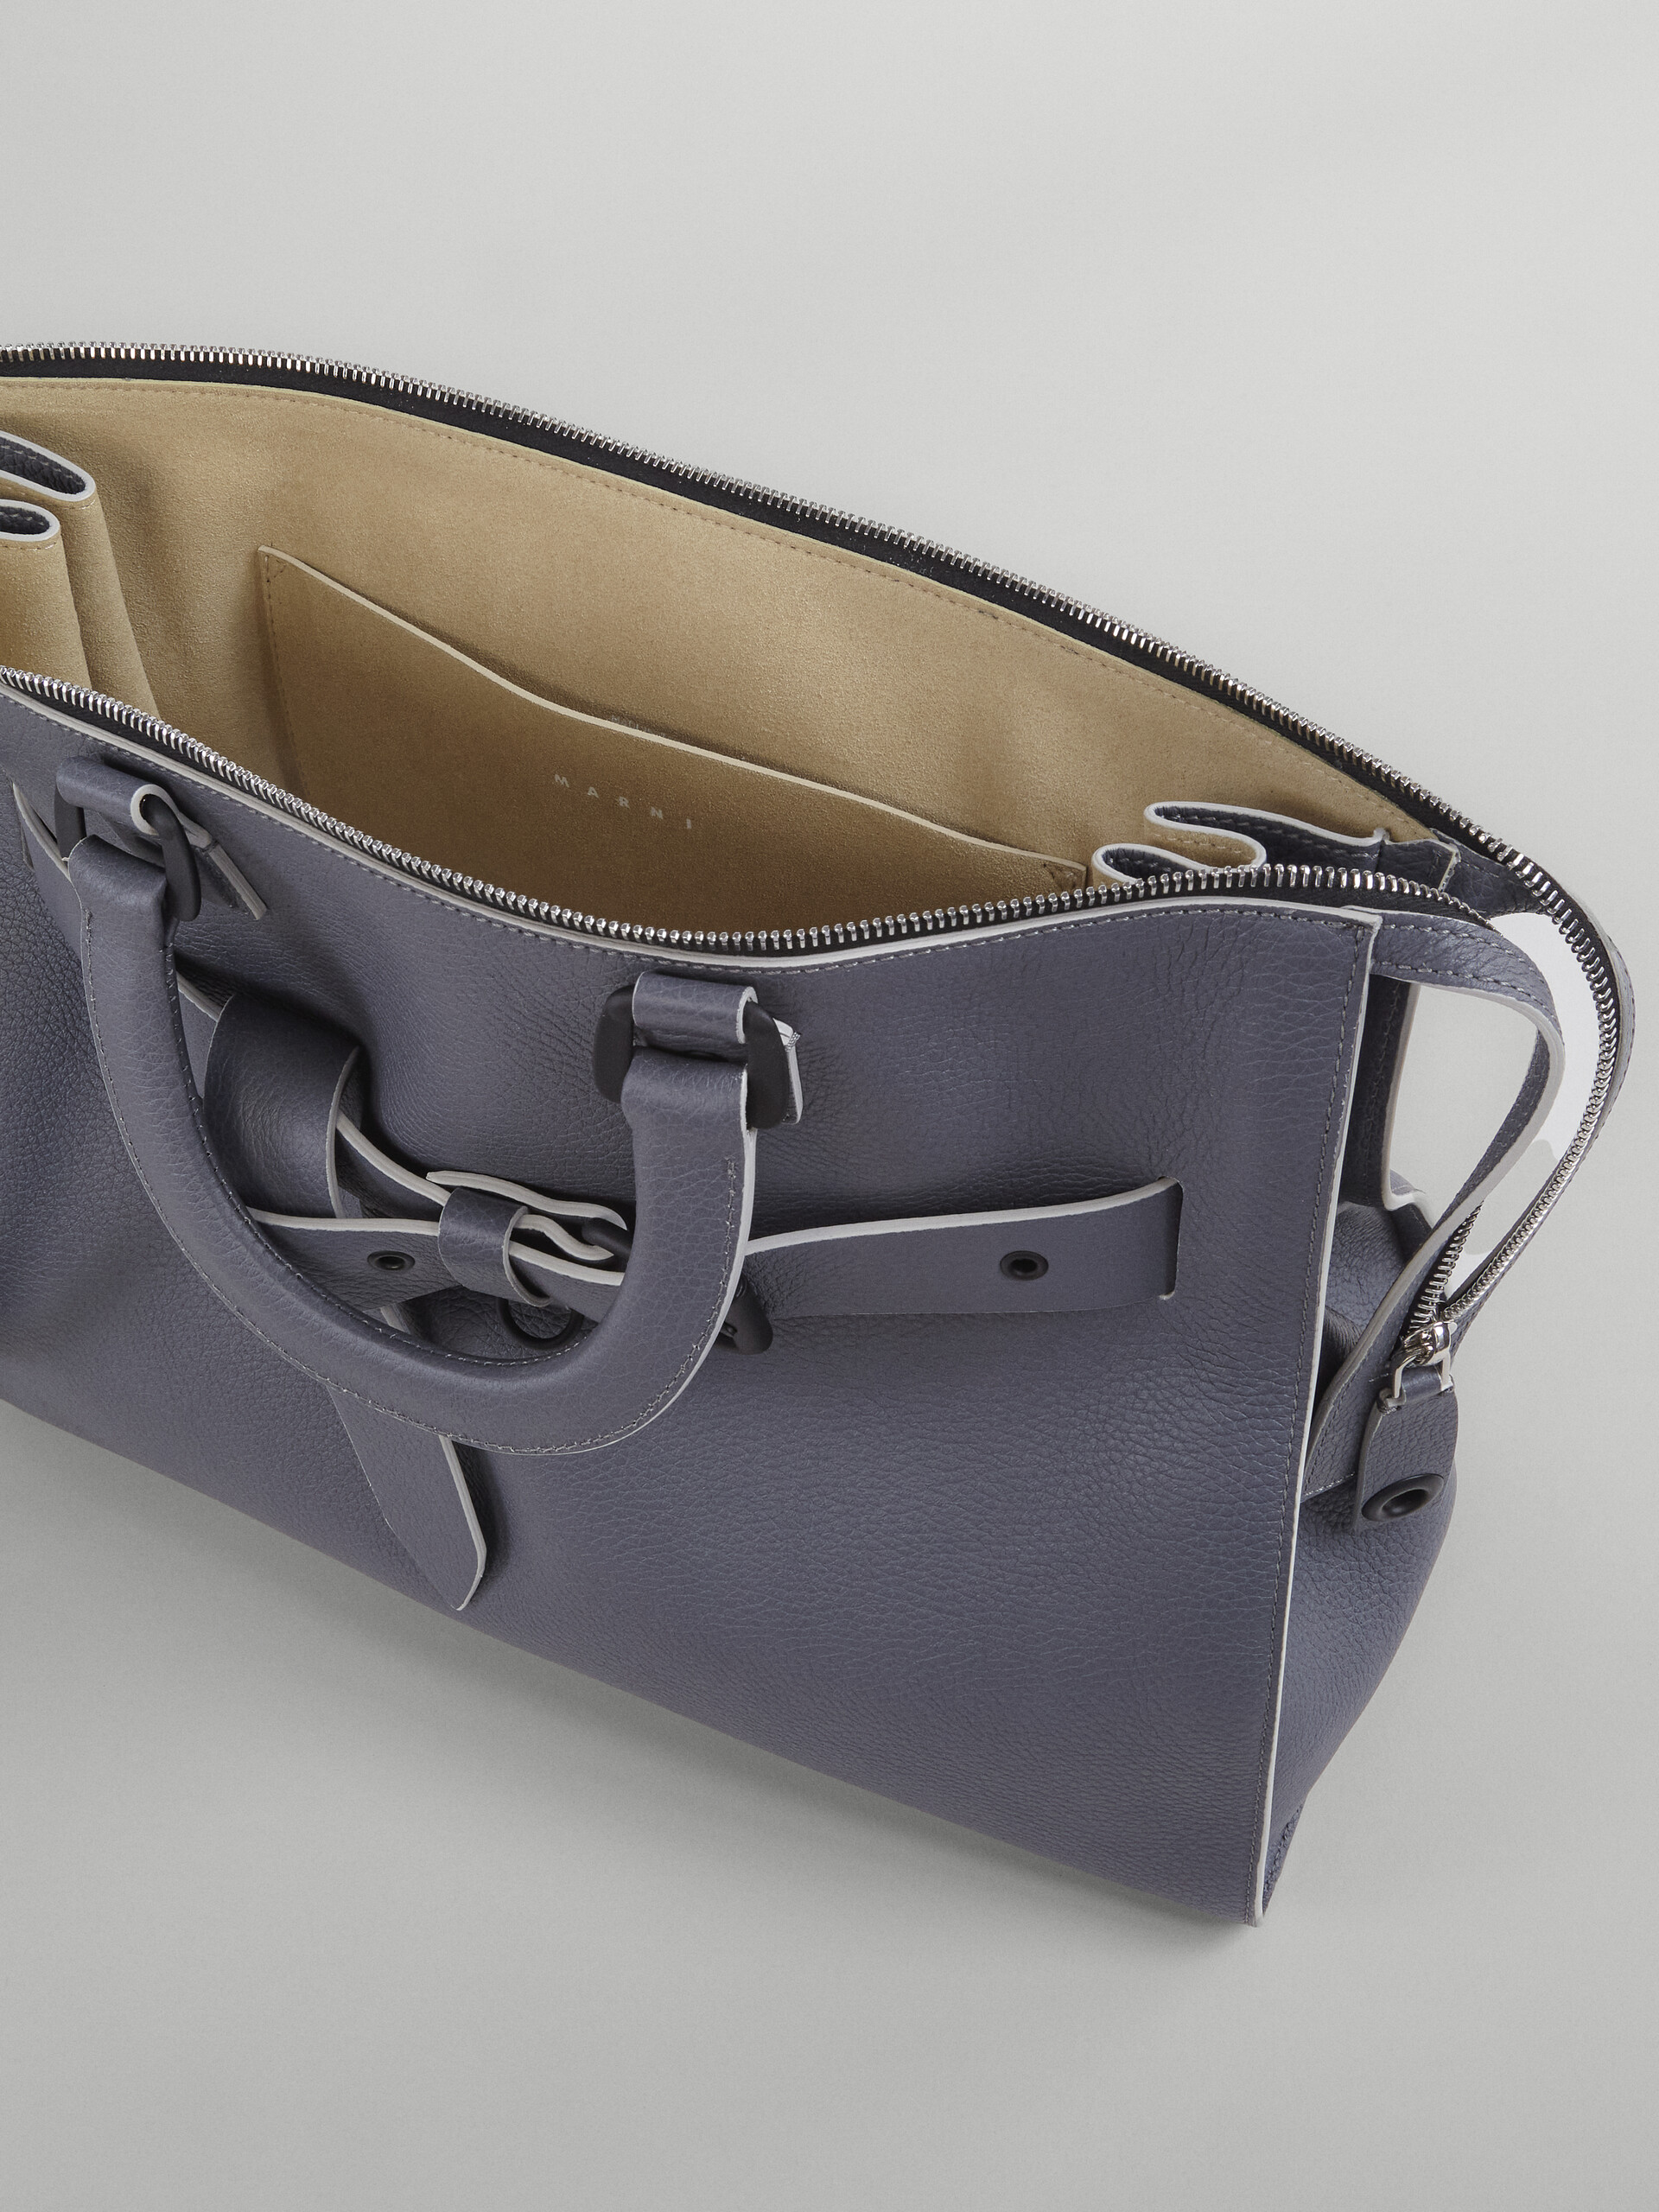 TREASURE bag in grey leather - Handbags - Image 5